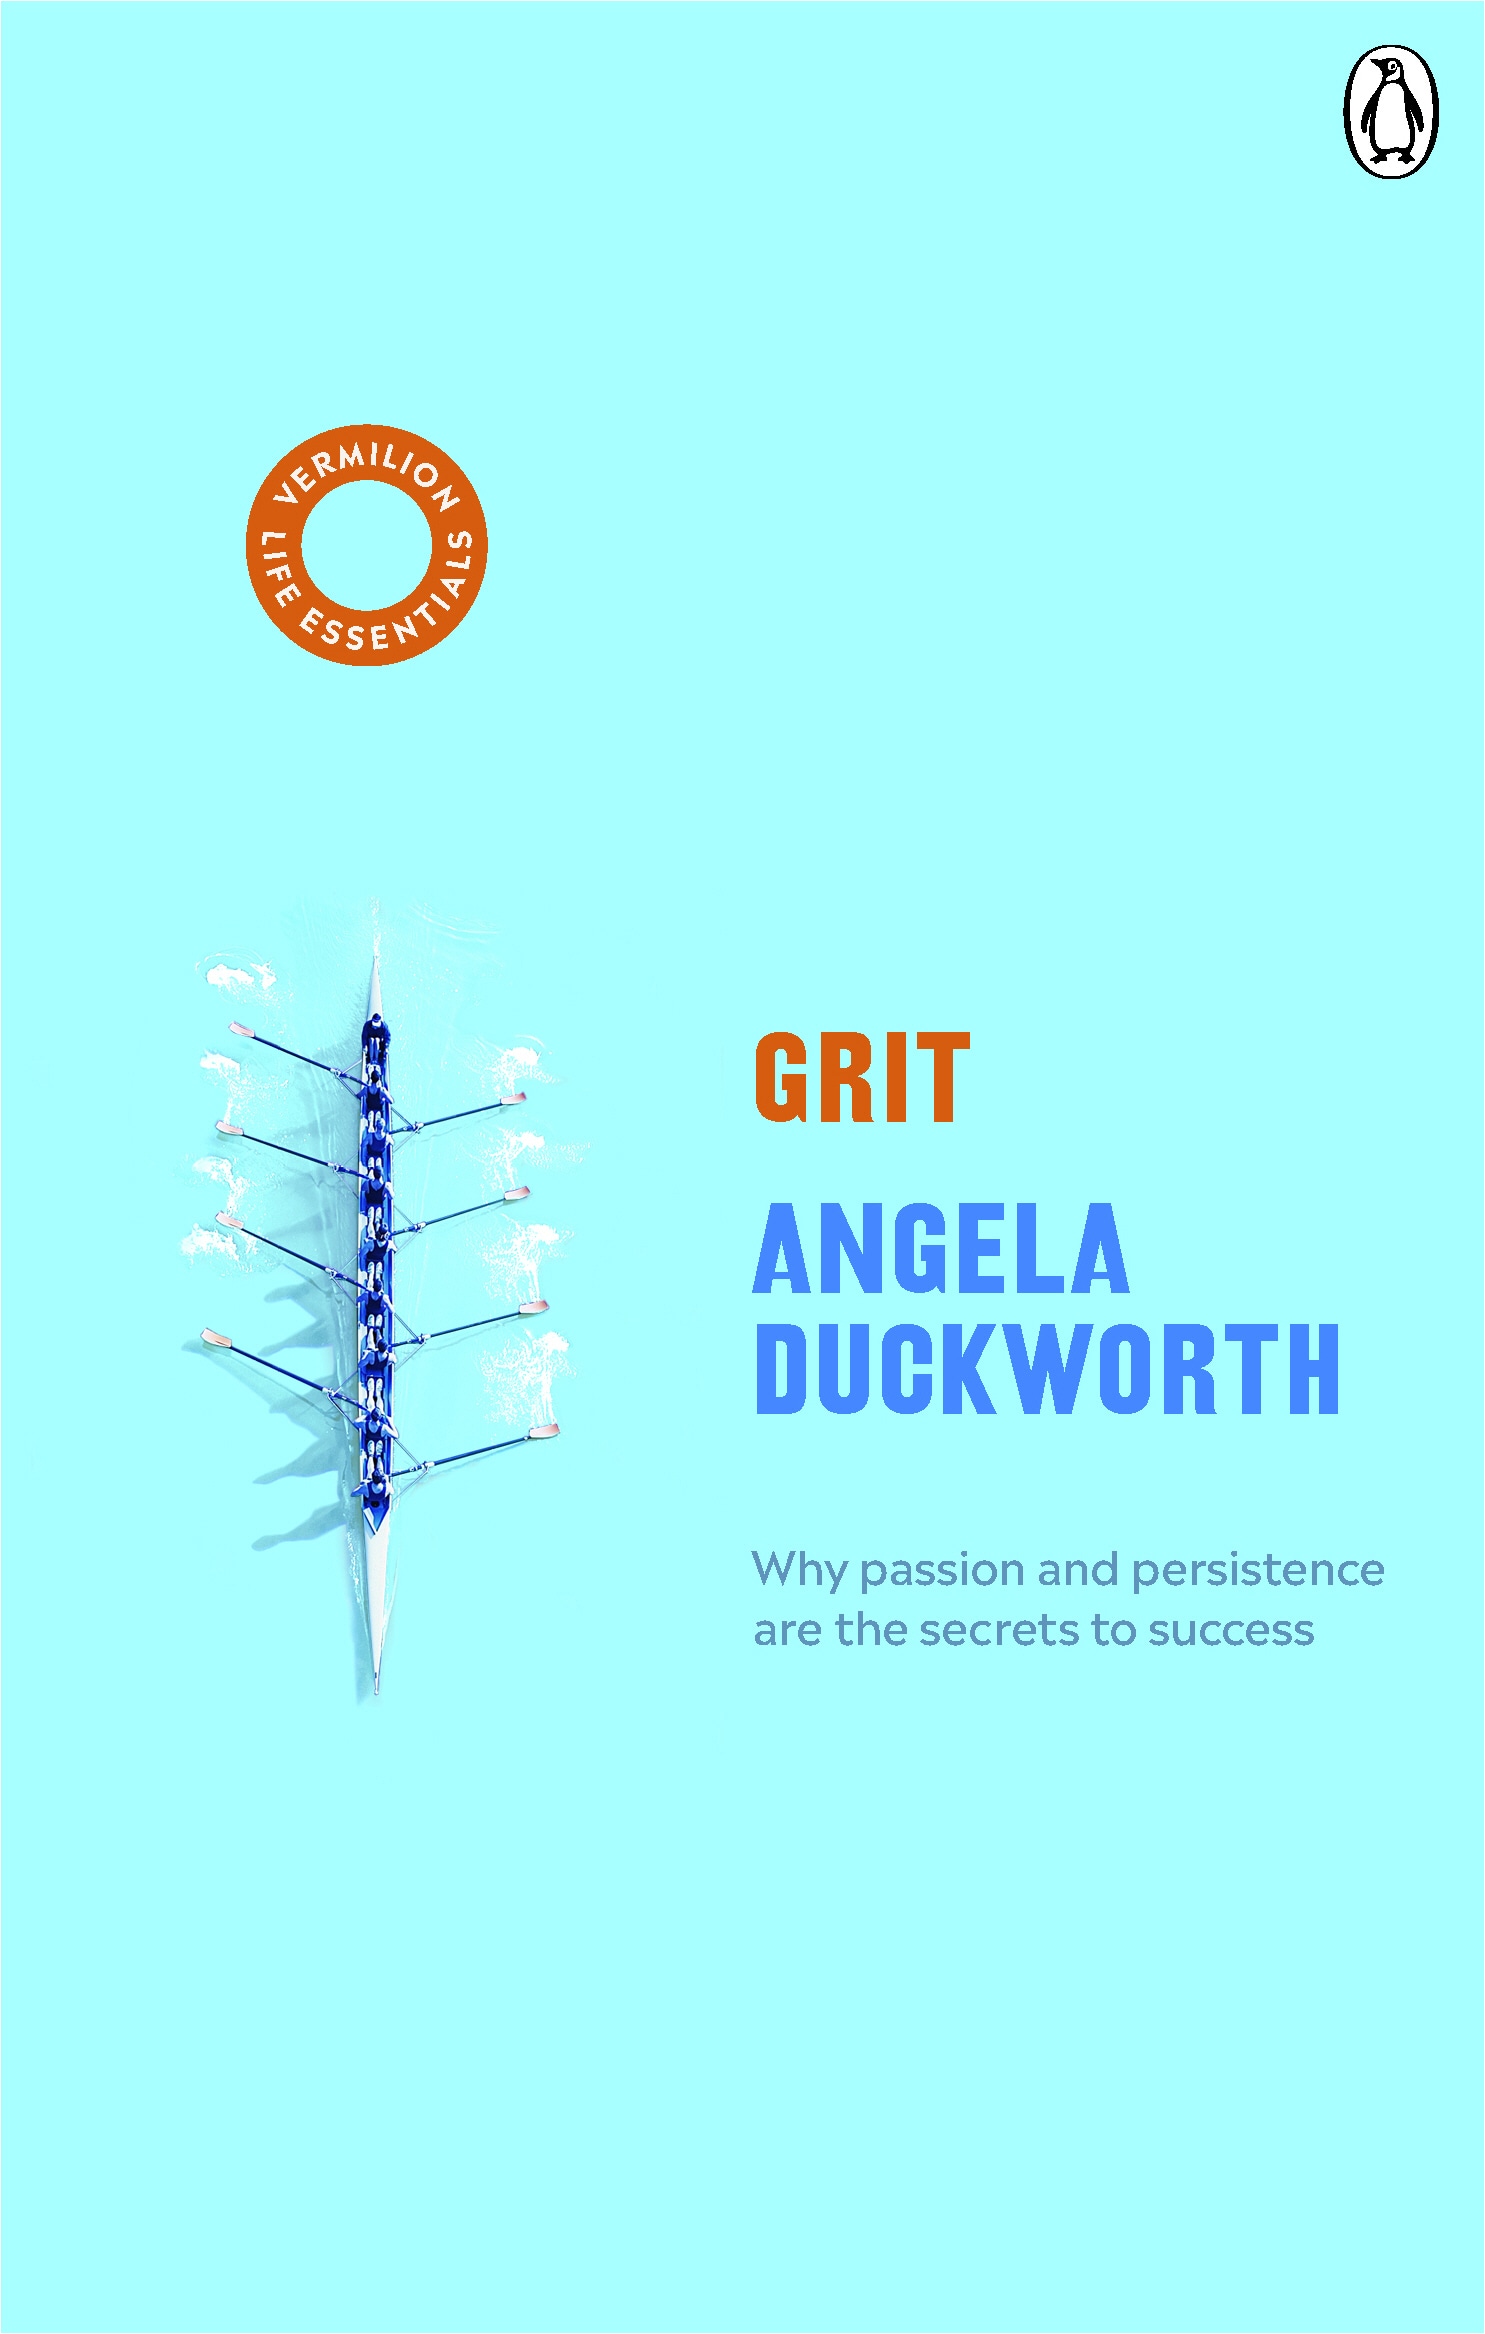 Book “Grit” by Angela Duckworth — August 8, 2019